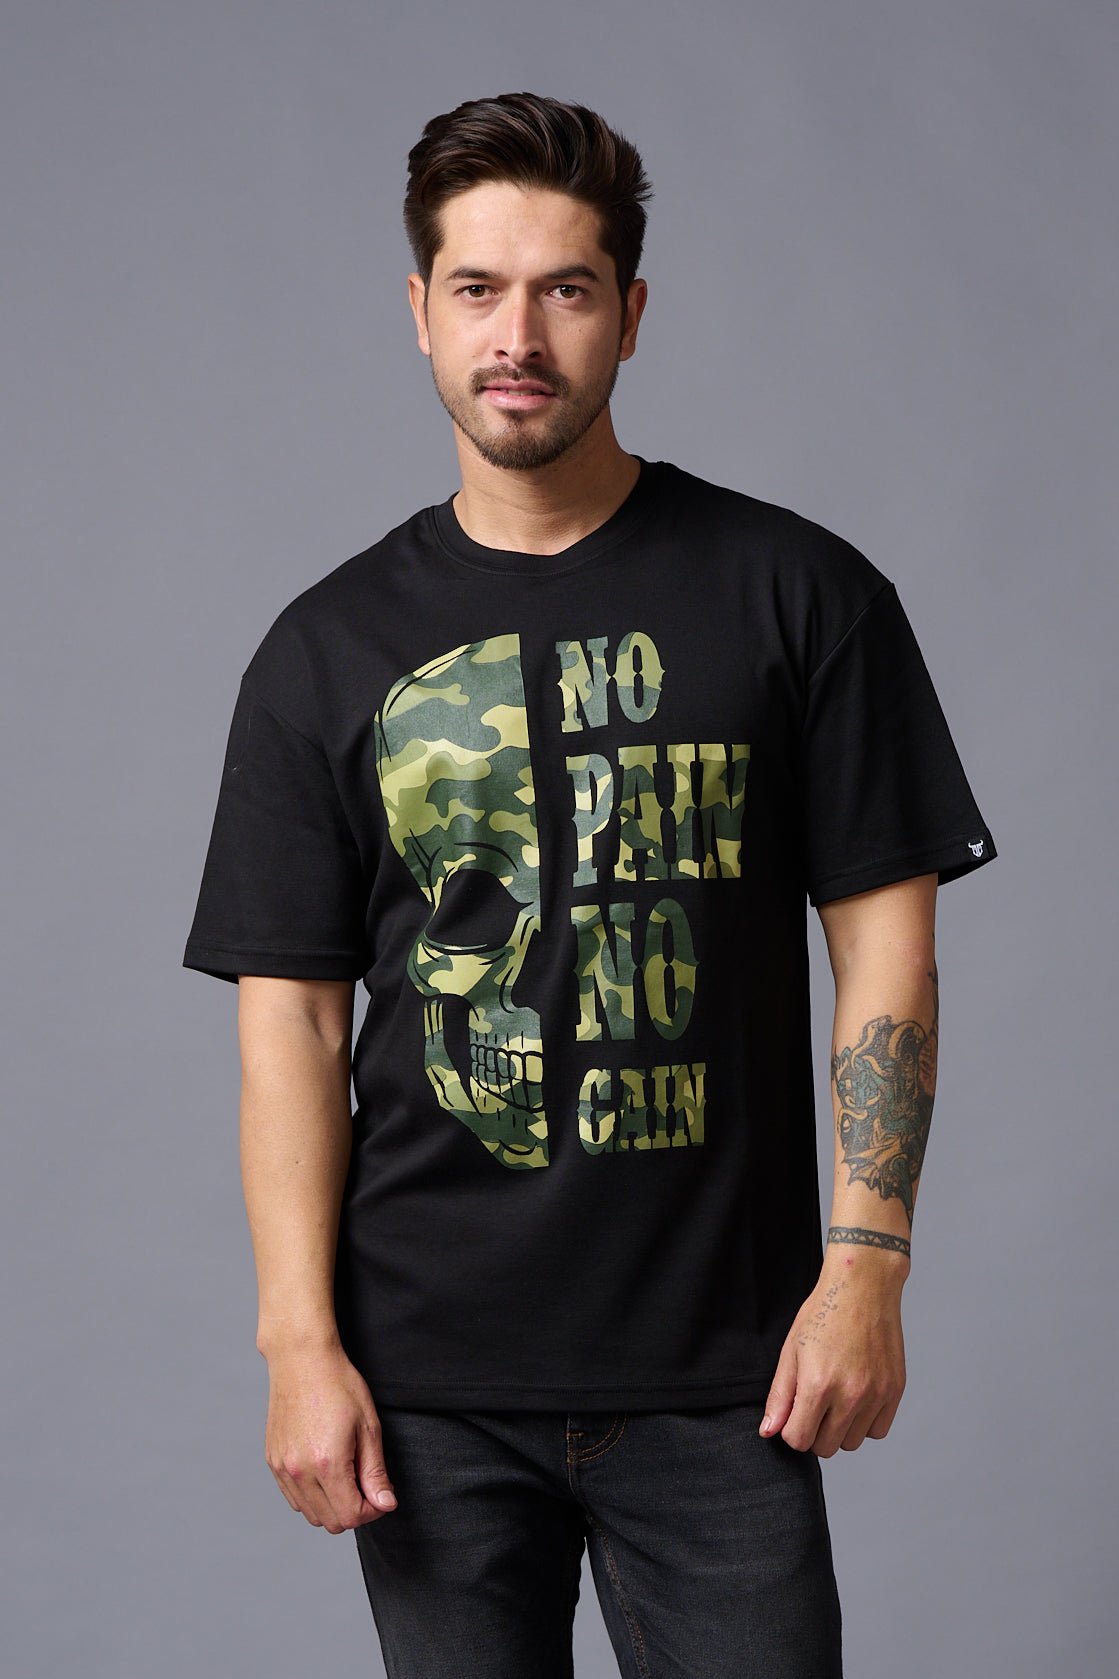 No Pain No Gain in Camo Print Black Oversized T-Shirt for Men - Go Devil